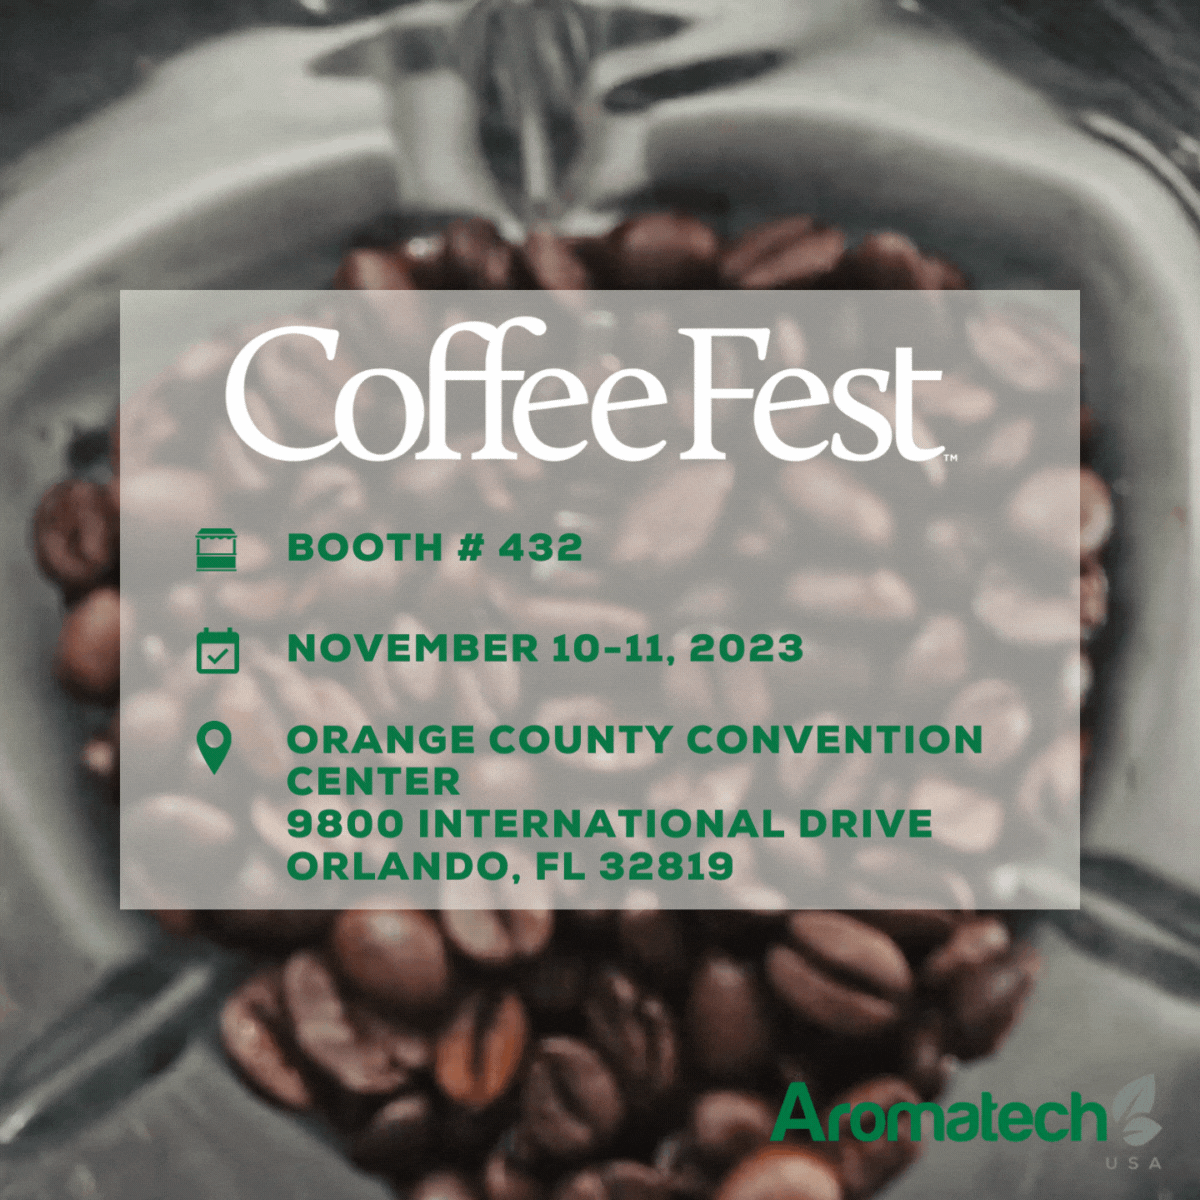 Aromatech USA to exhibit Coffee Fest Orlando 2023